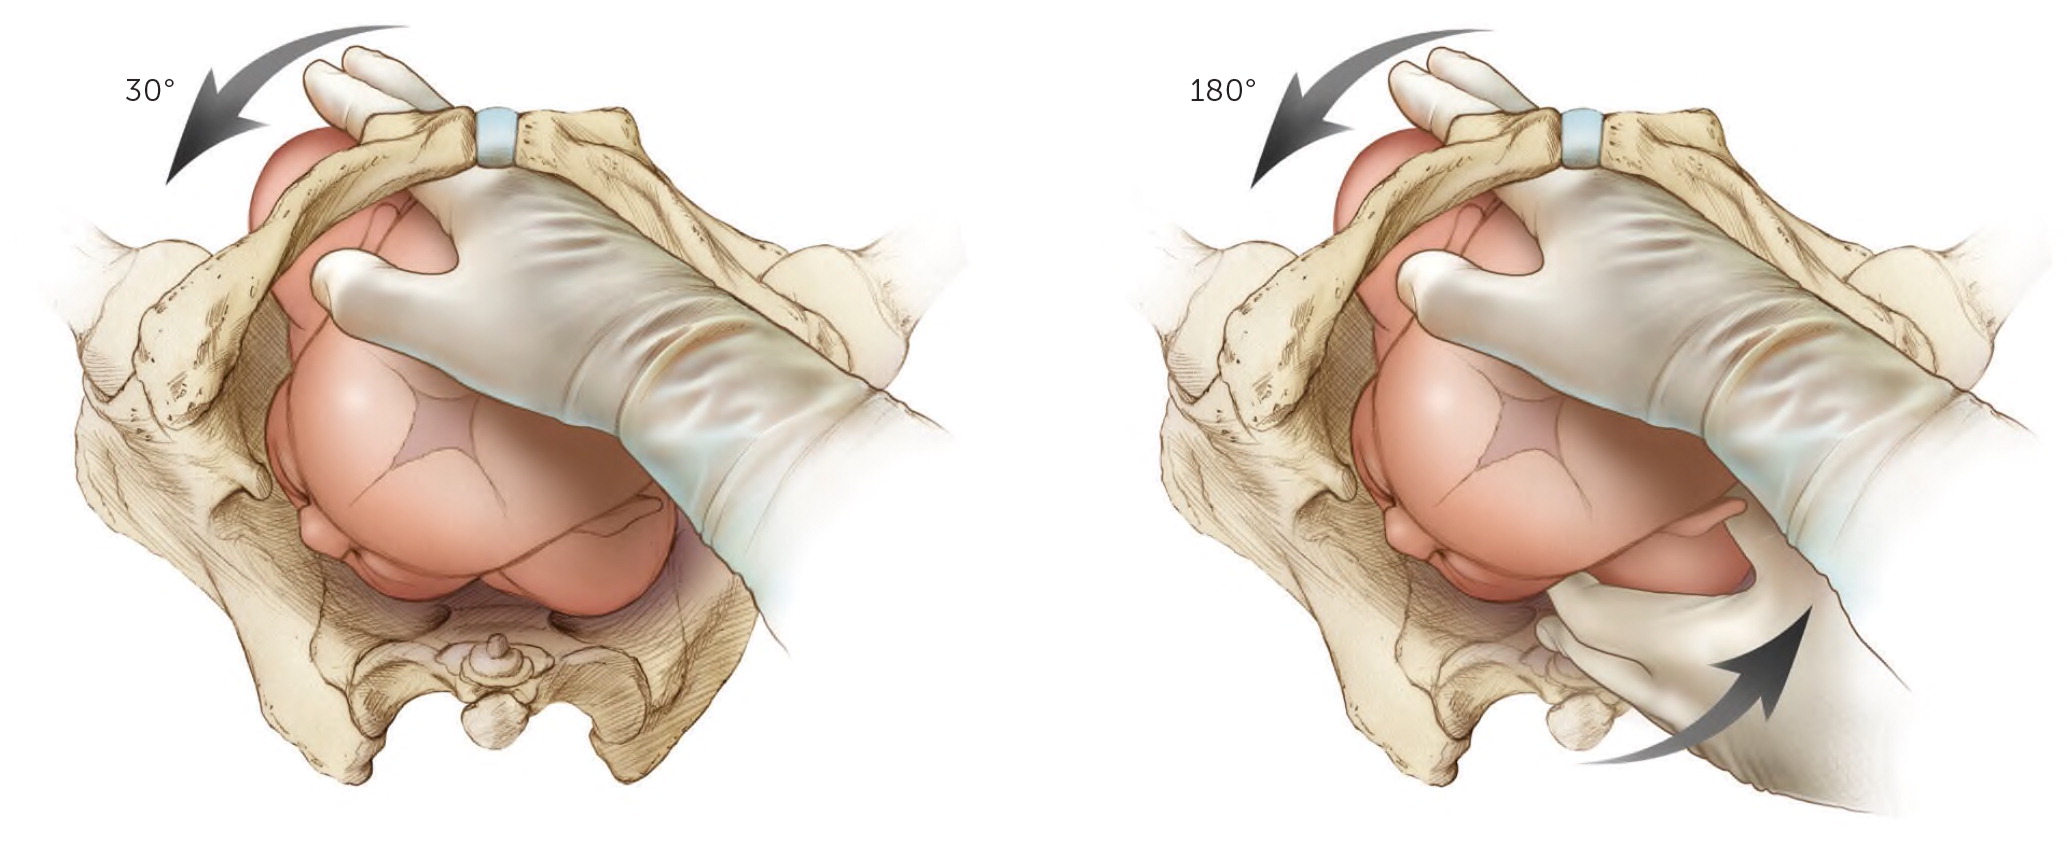 shoulder presentation complications of fetus